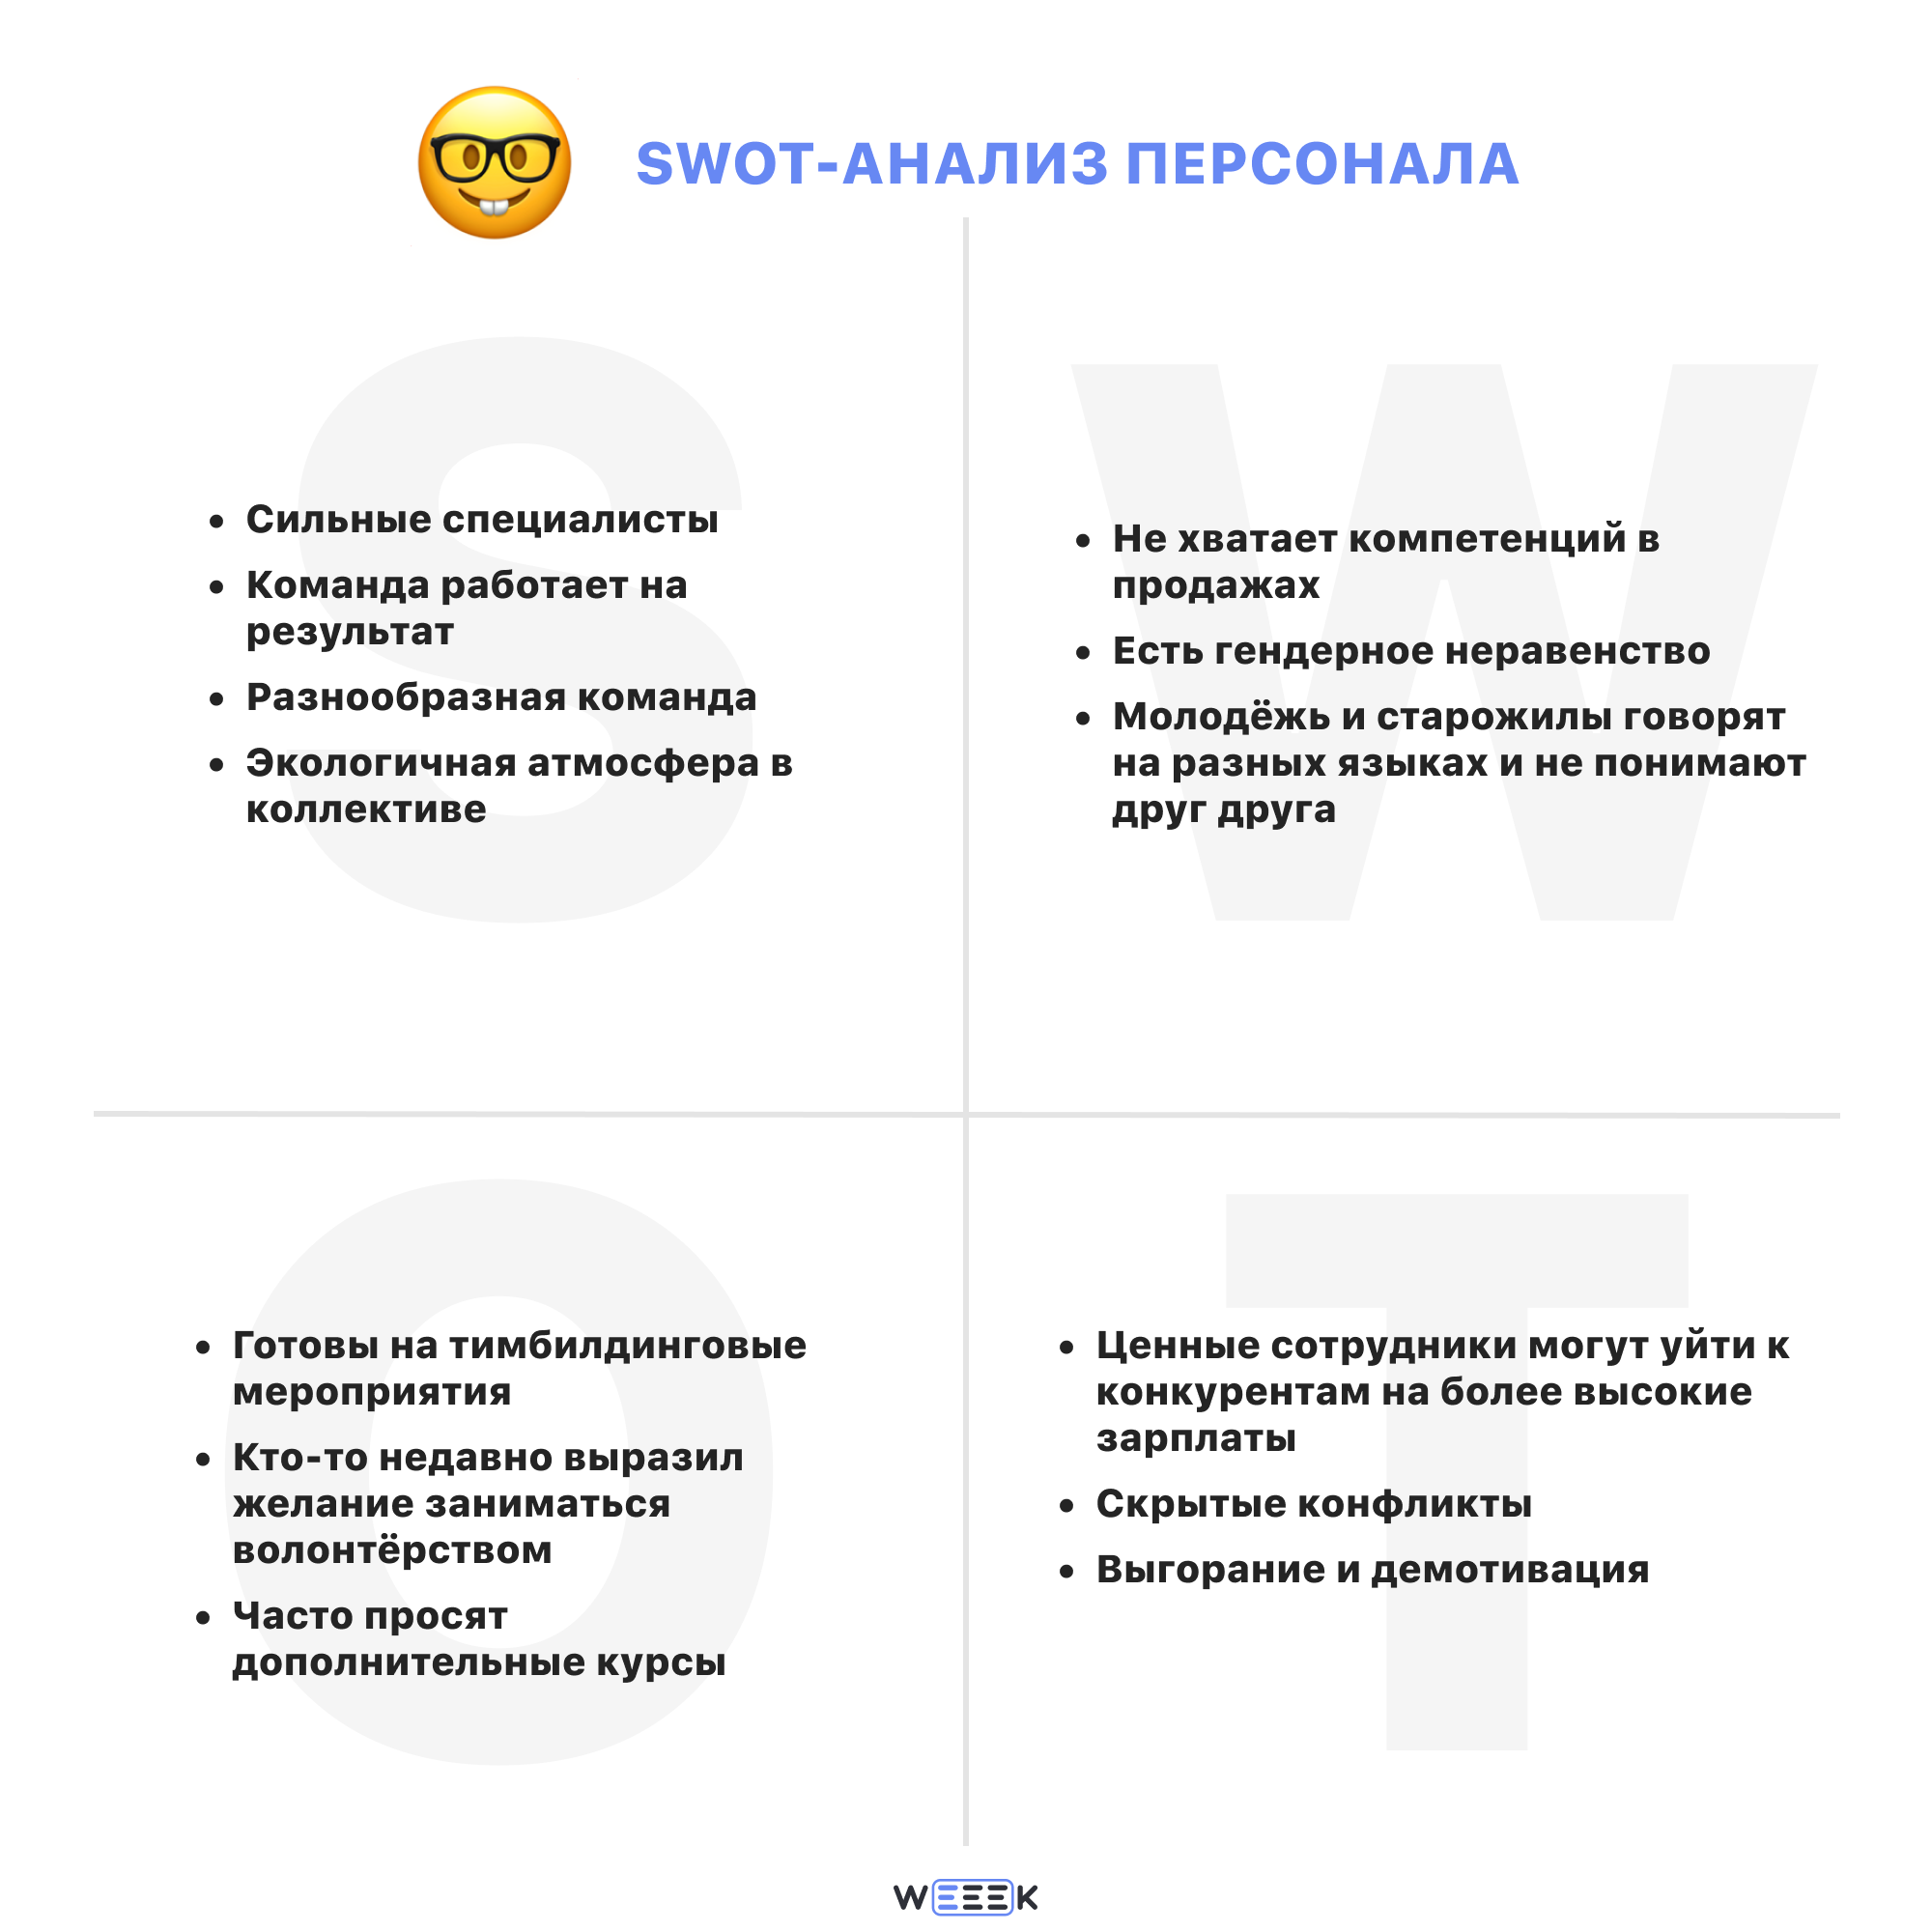 SWOT-анализ персонала